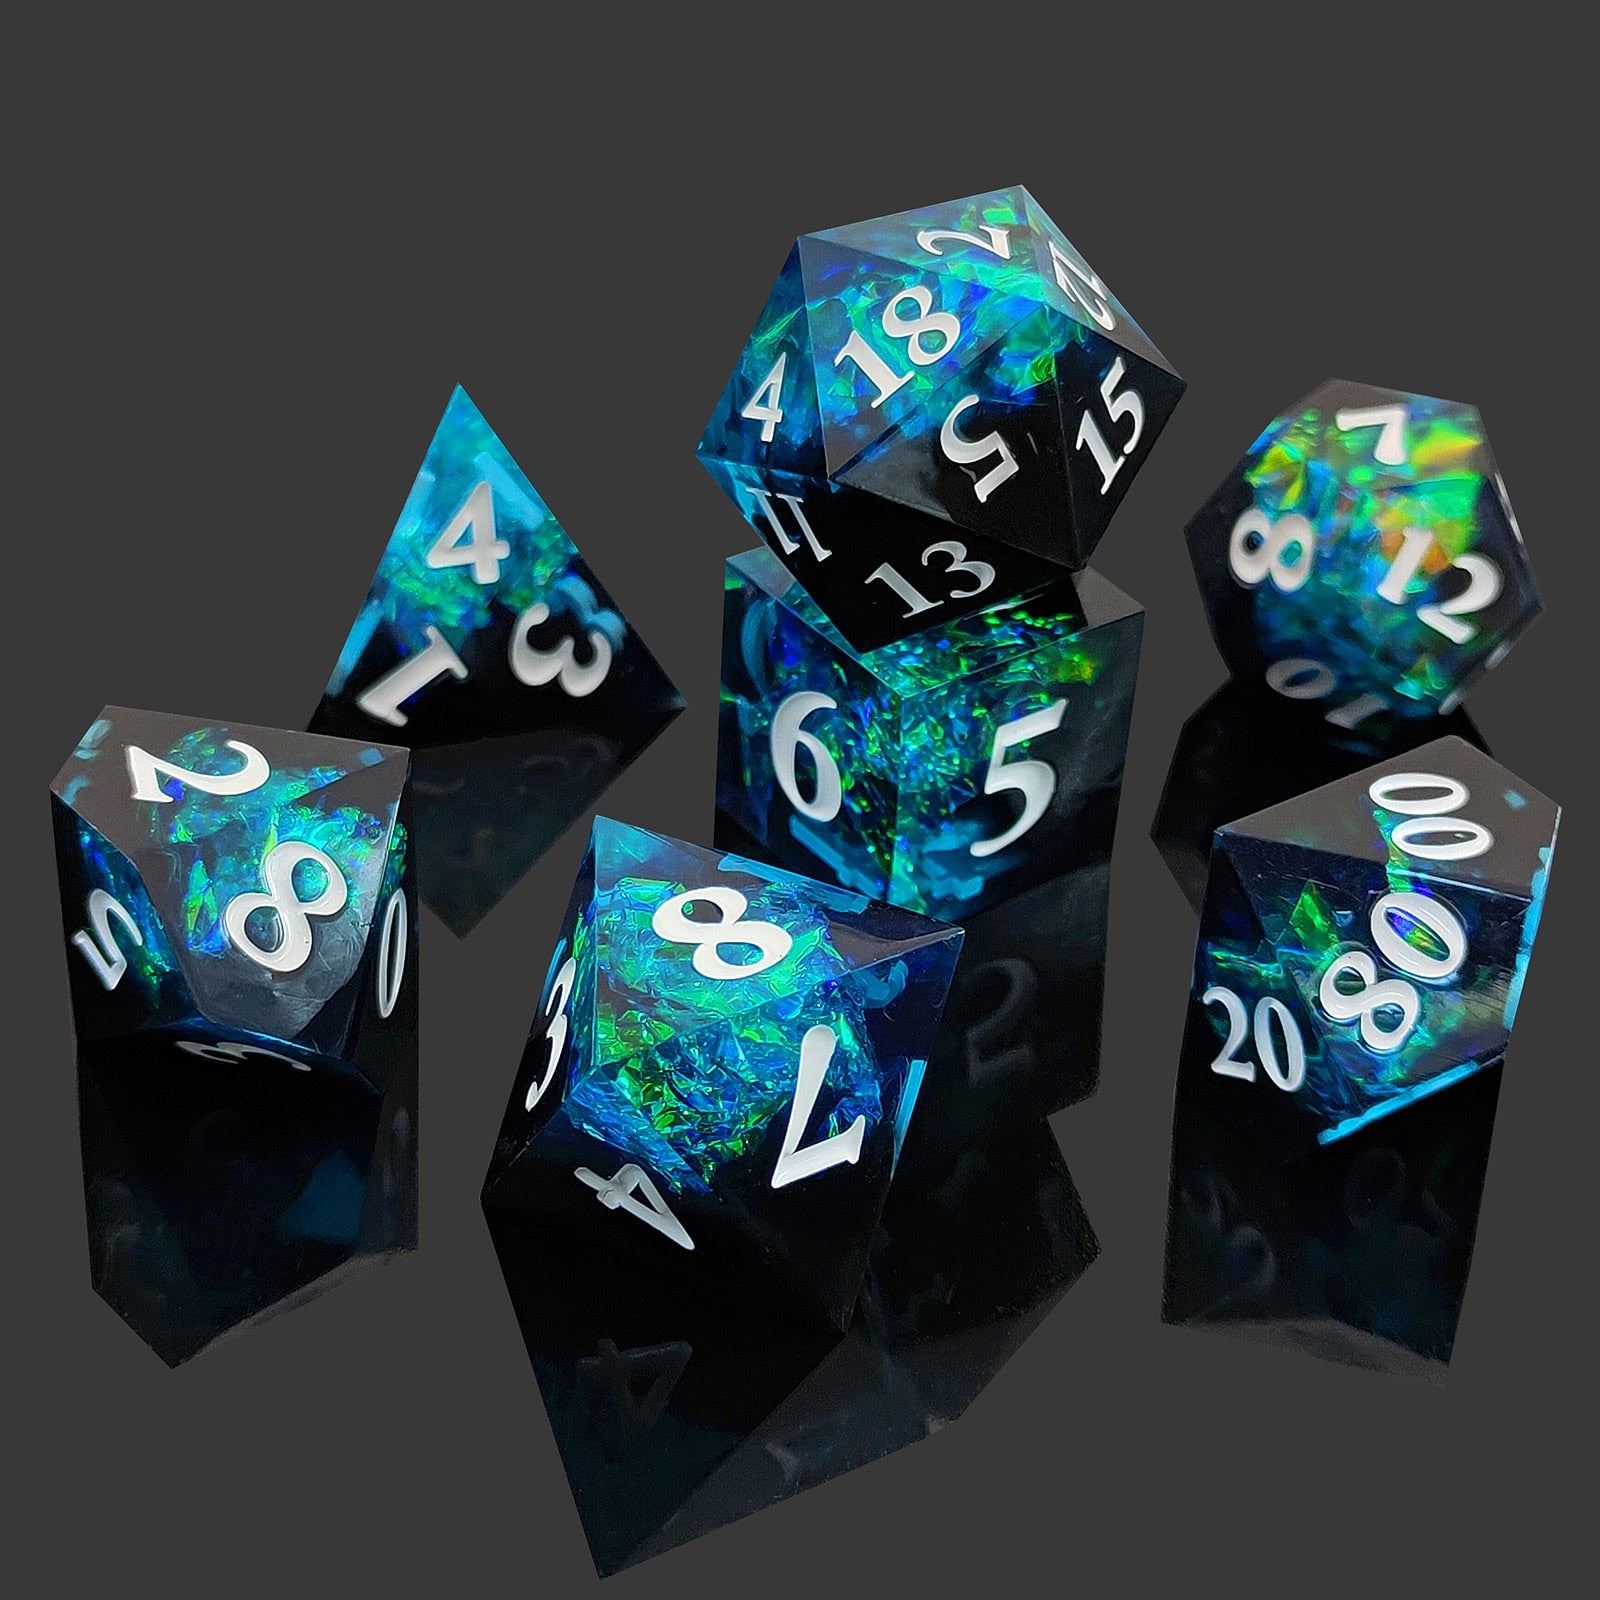 Mage's Secret dice set